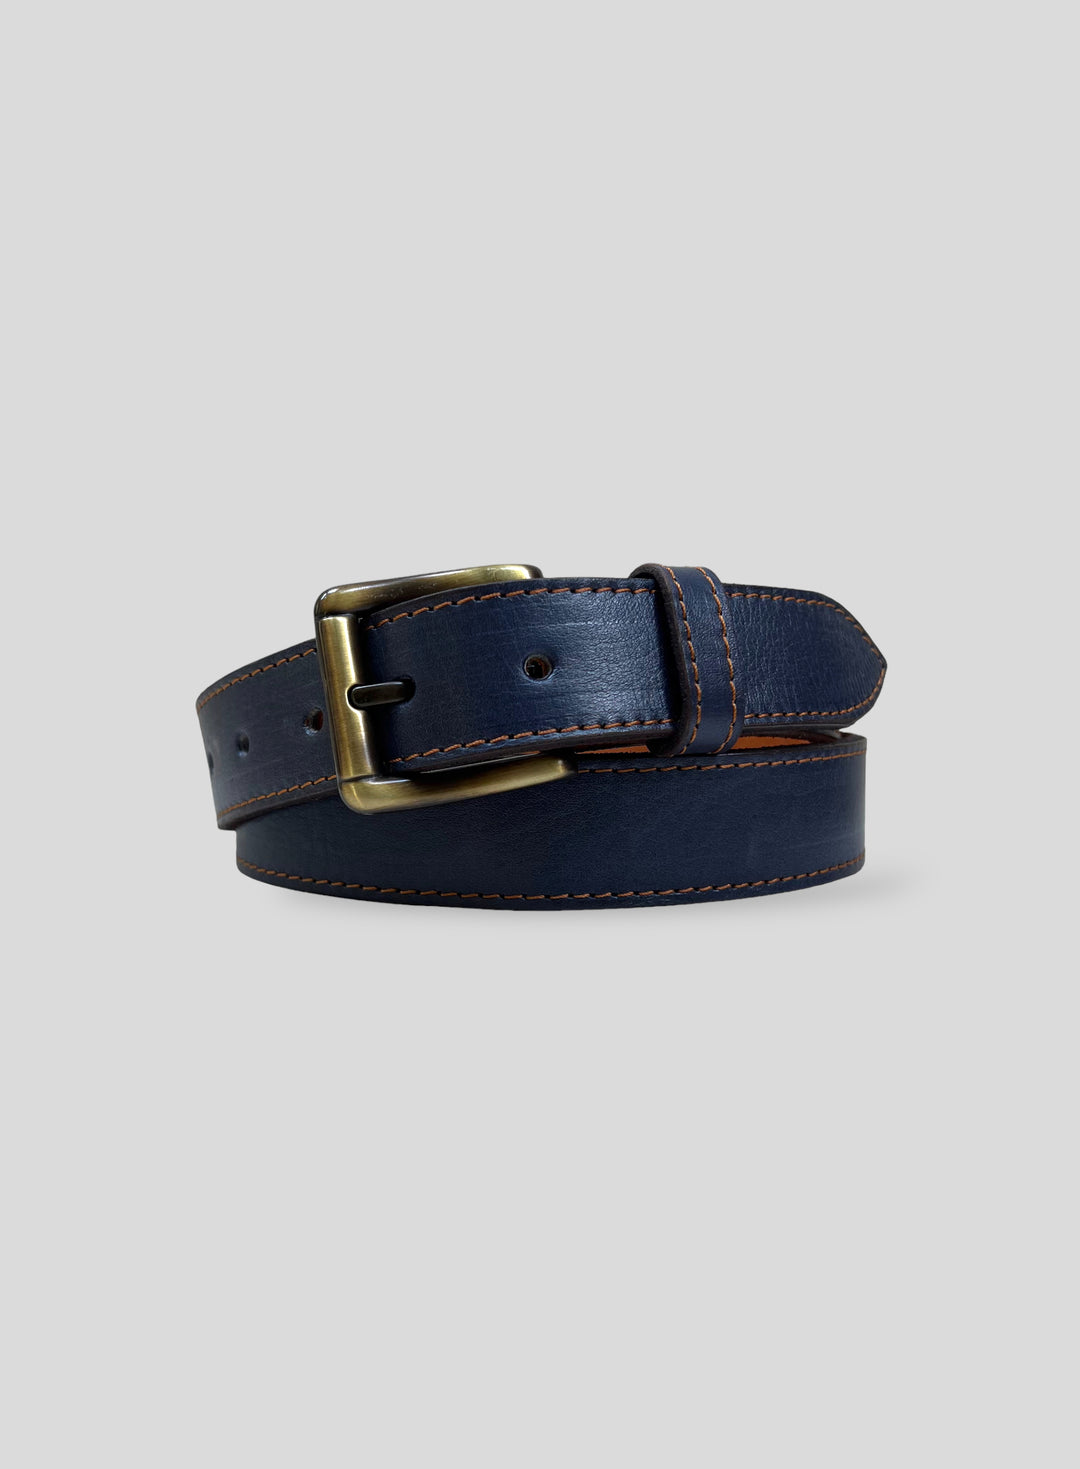 Navy Blue Leather Belt